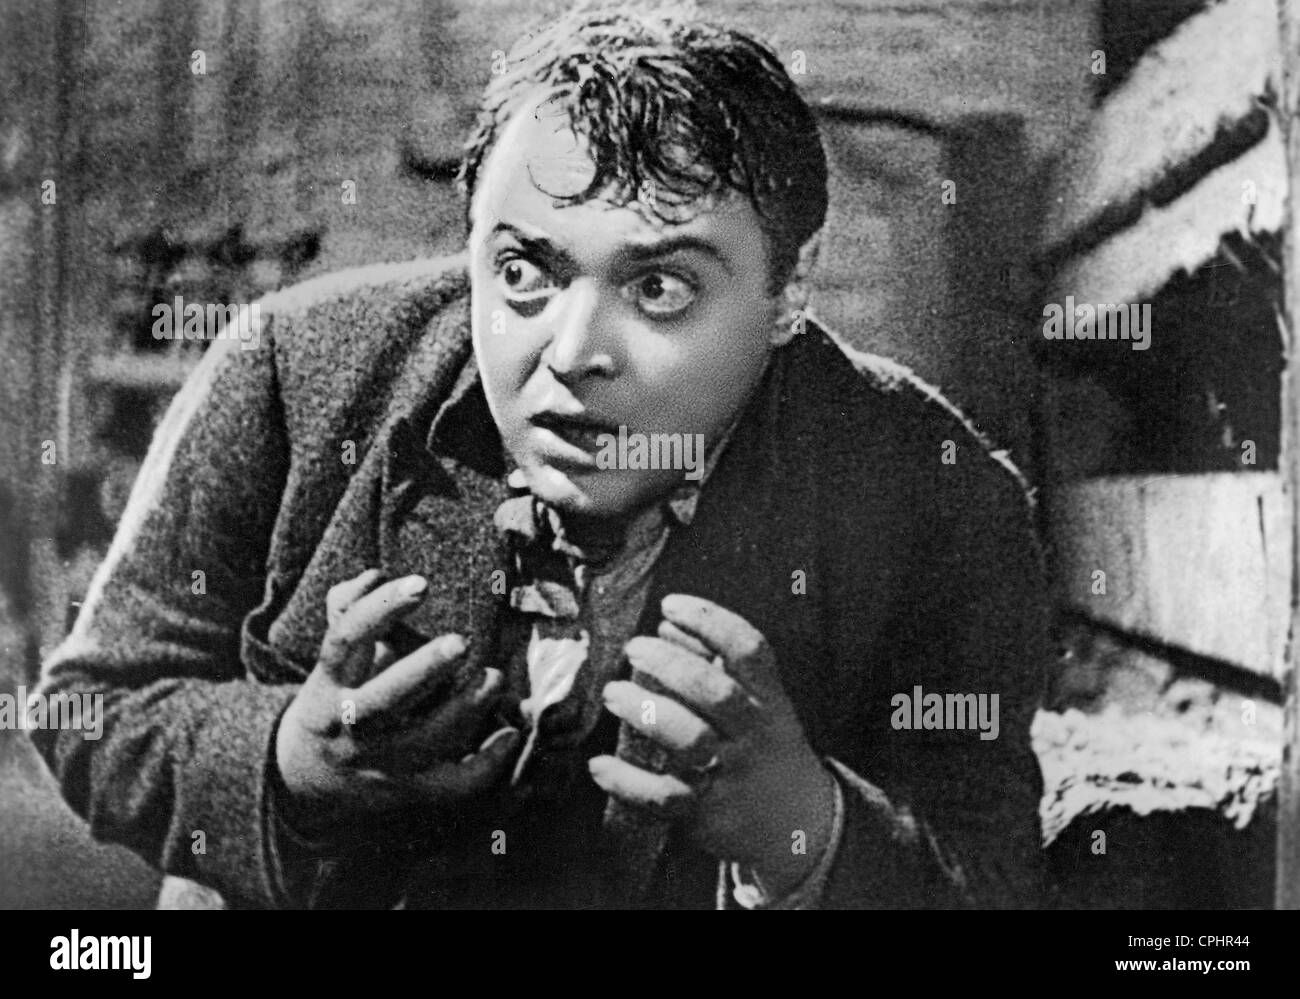 Peter Lorre in "Der ewige Jude", 1940 Stockfoto